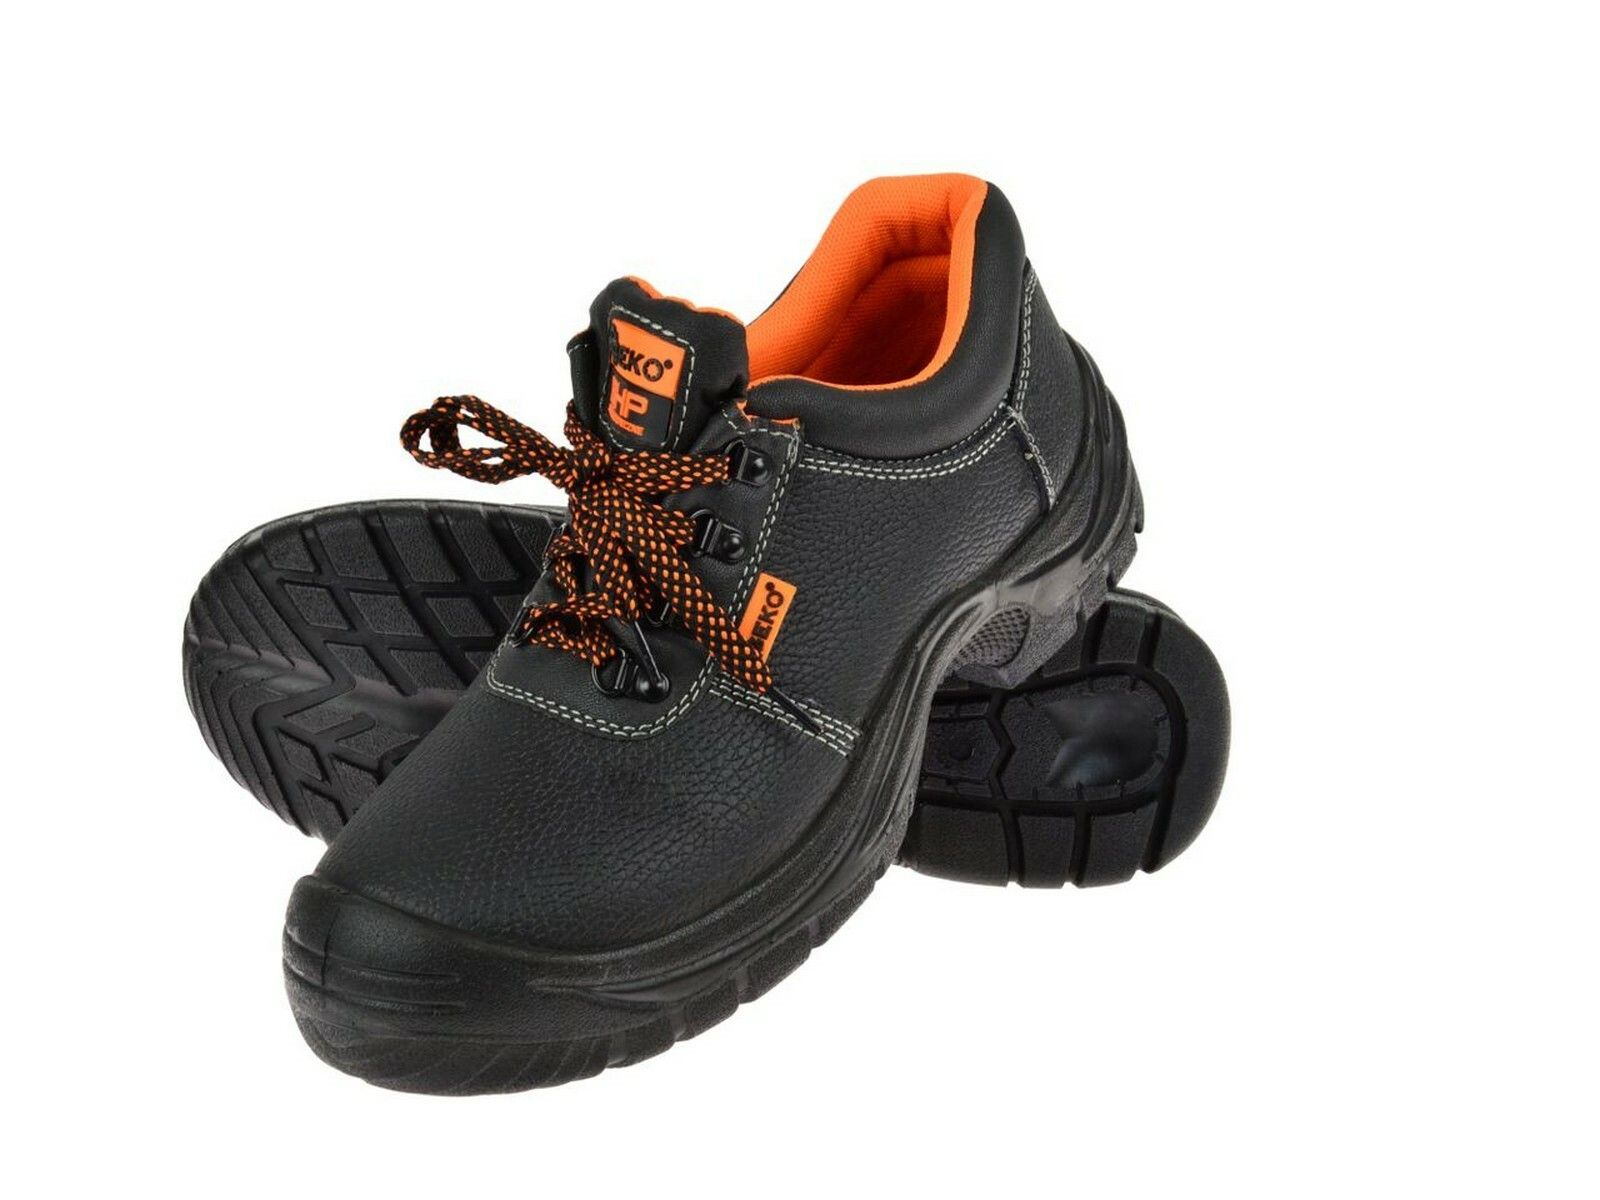 Ochranné pracovní boty model č.1 vel.39 - bez krabice GEKO GEKO nářadí G90499RO